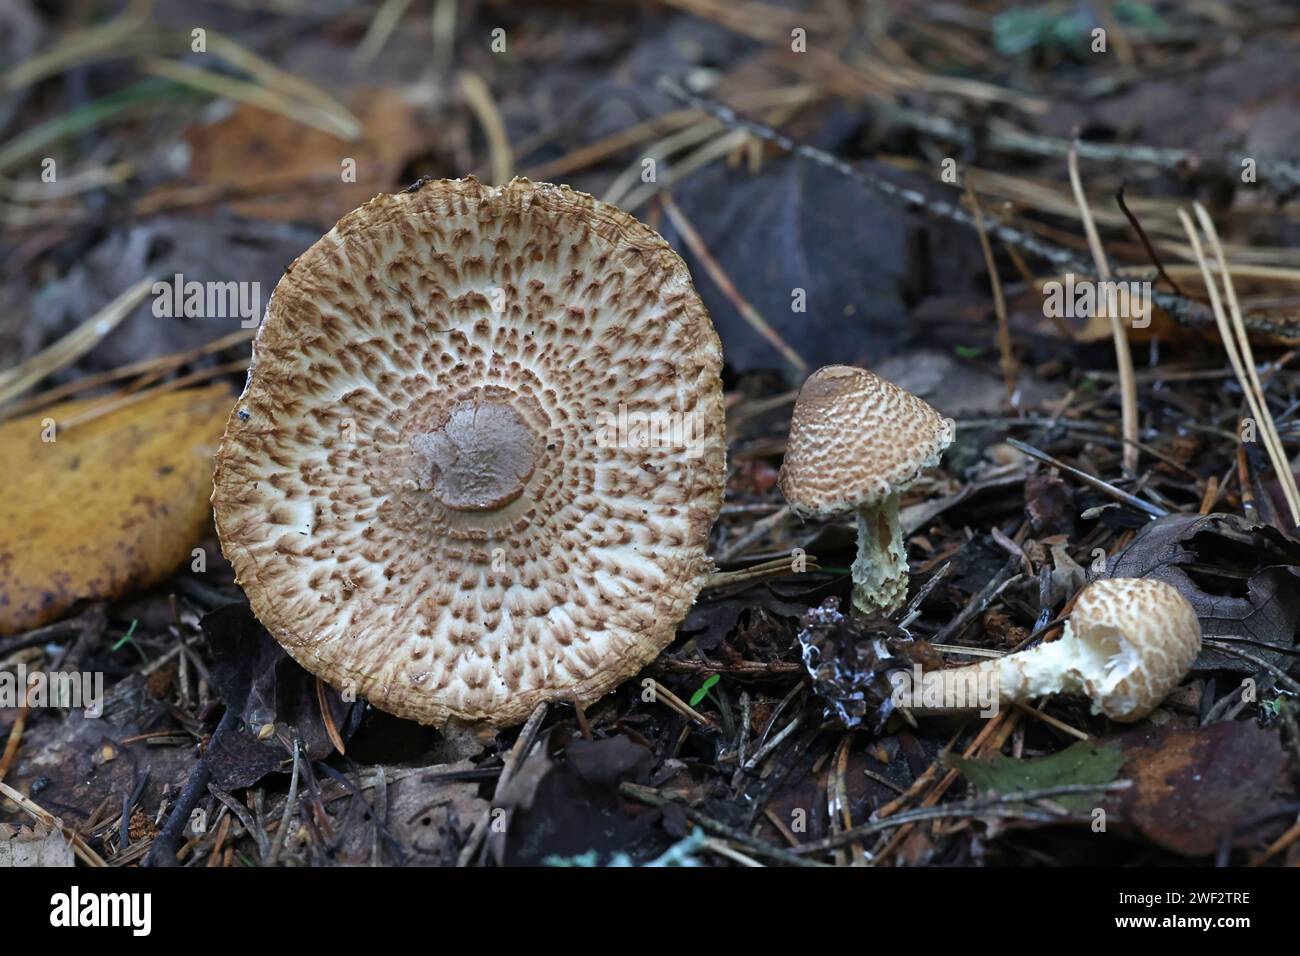 Lepiota magnispora, known as  Yellowleg Dapperling or Fleecy Dapperling, wild mushrooms from Finland Stock Photo